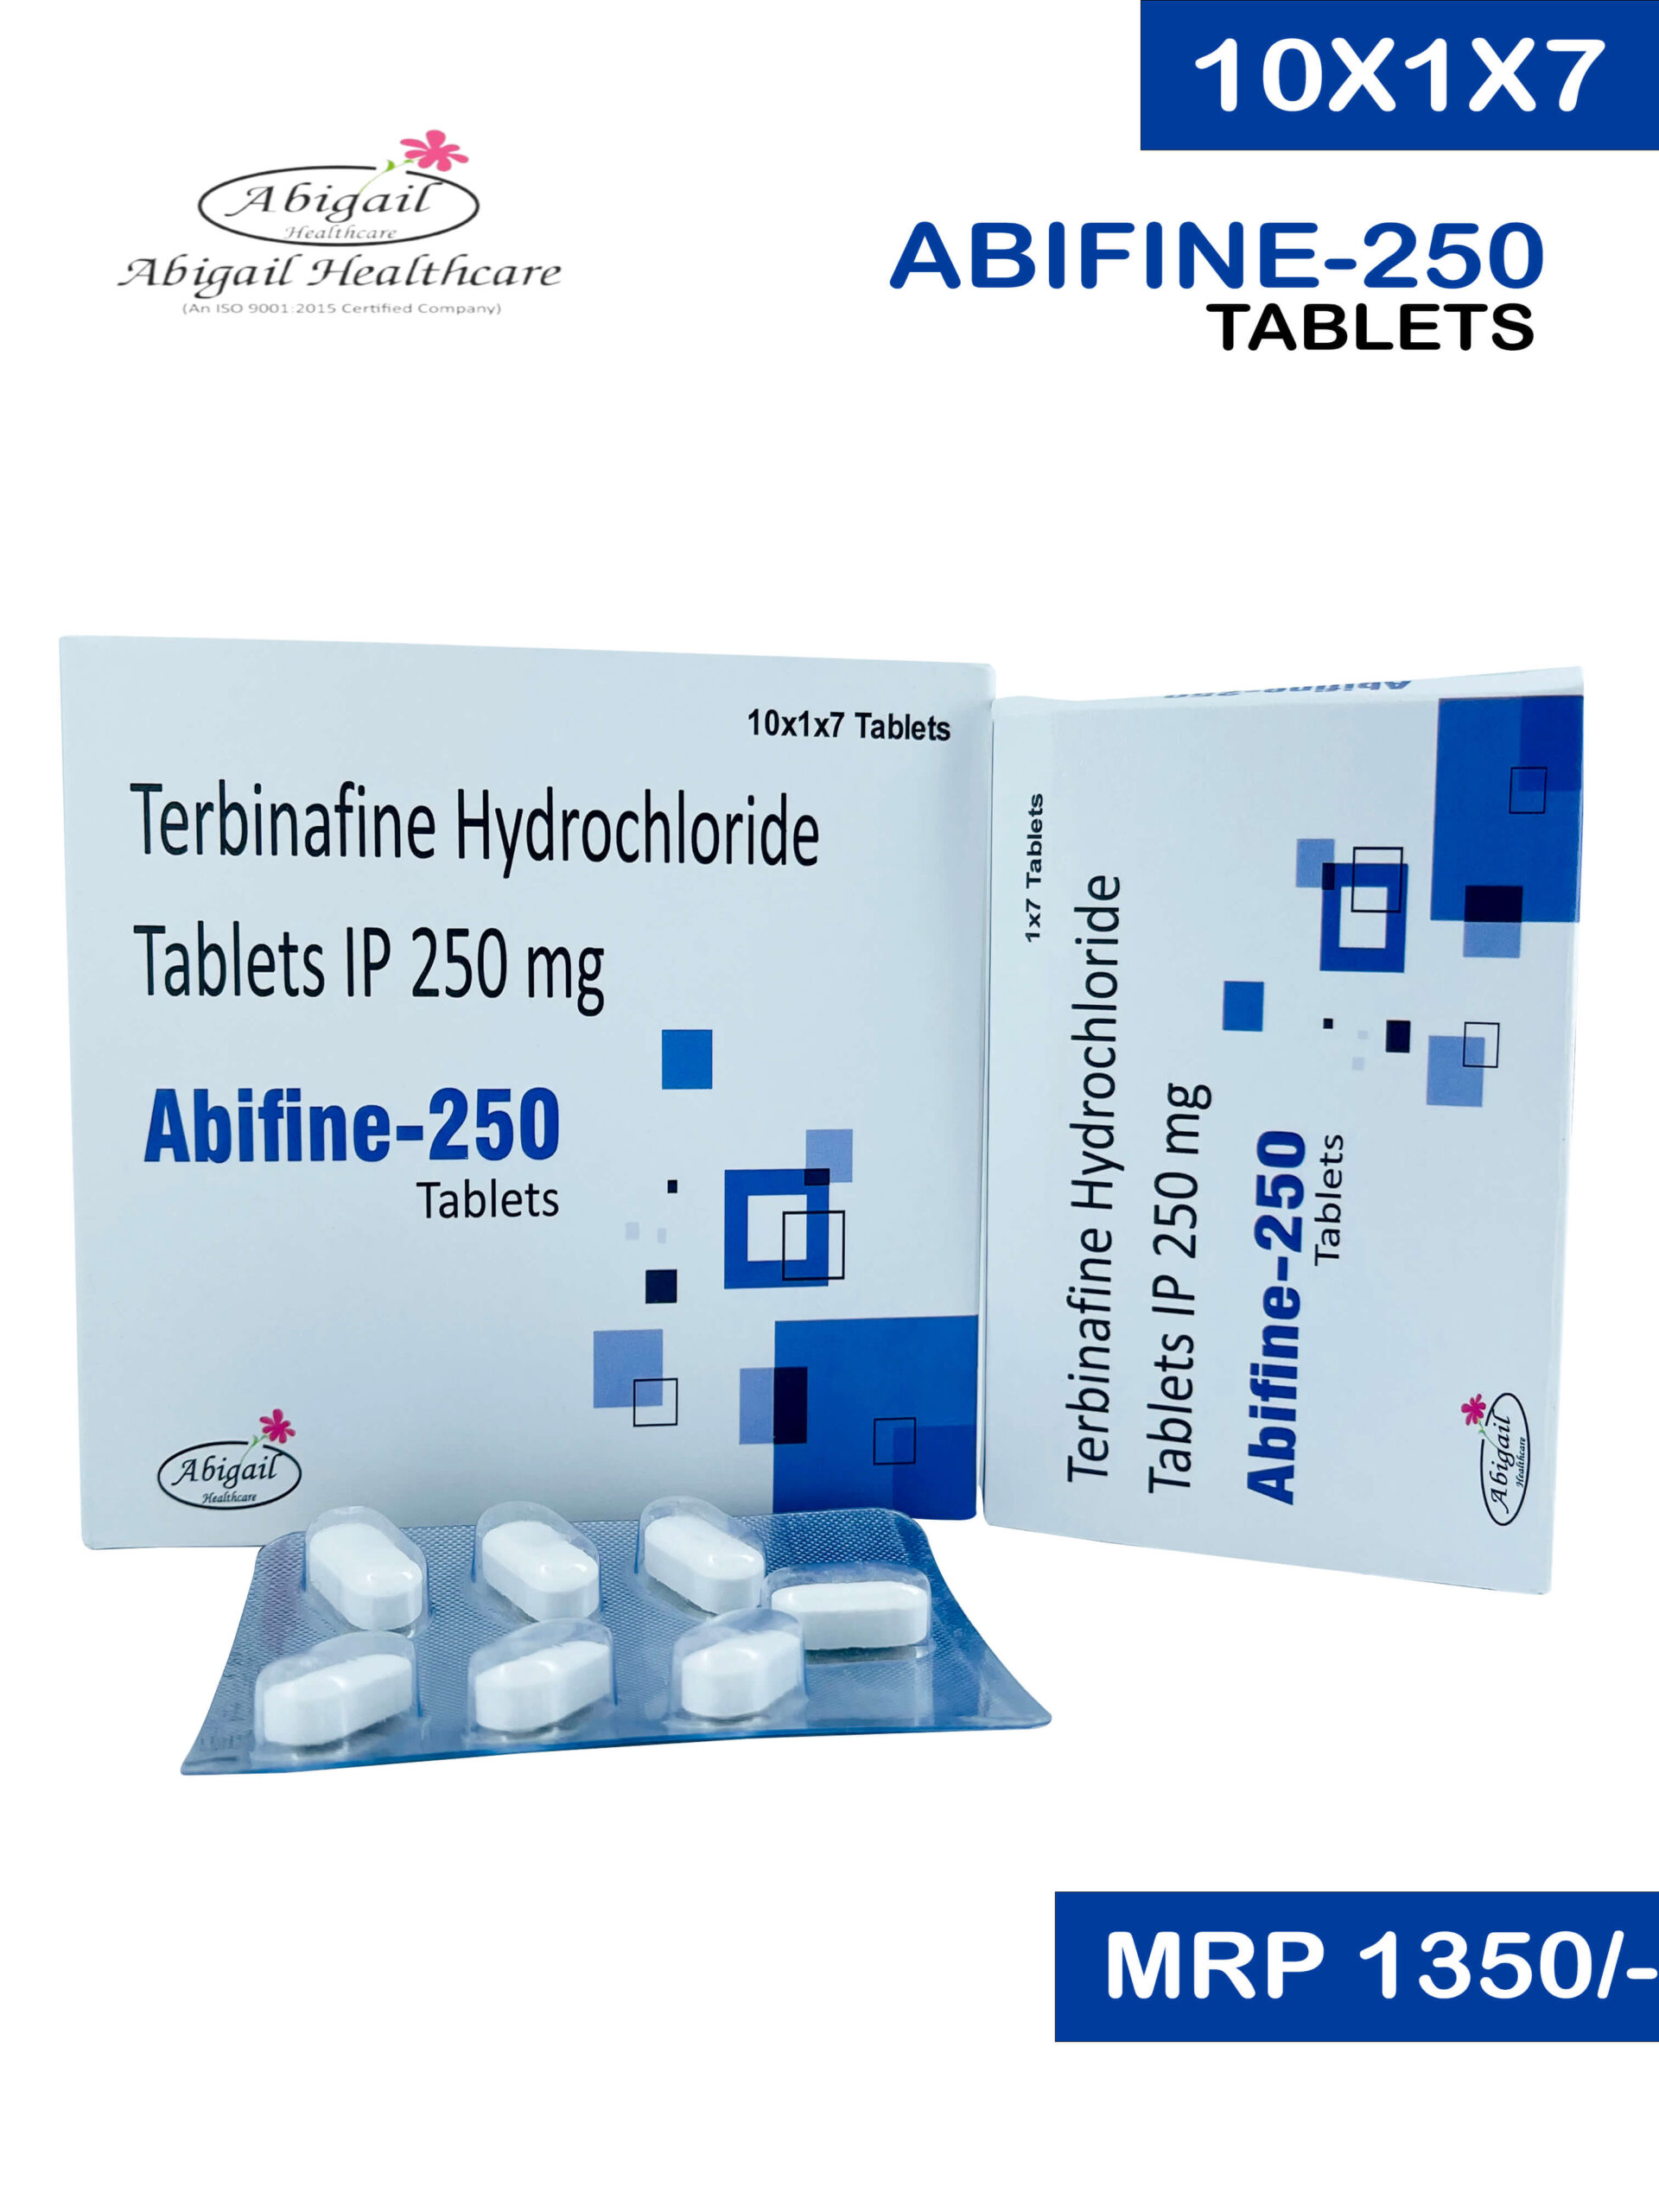 ABIFINE-250